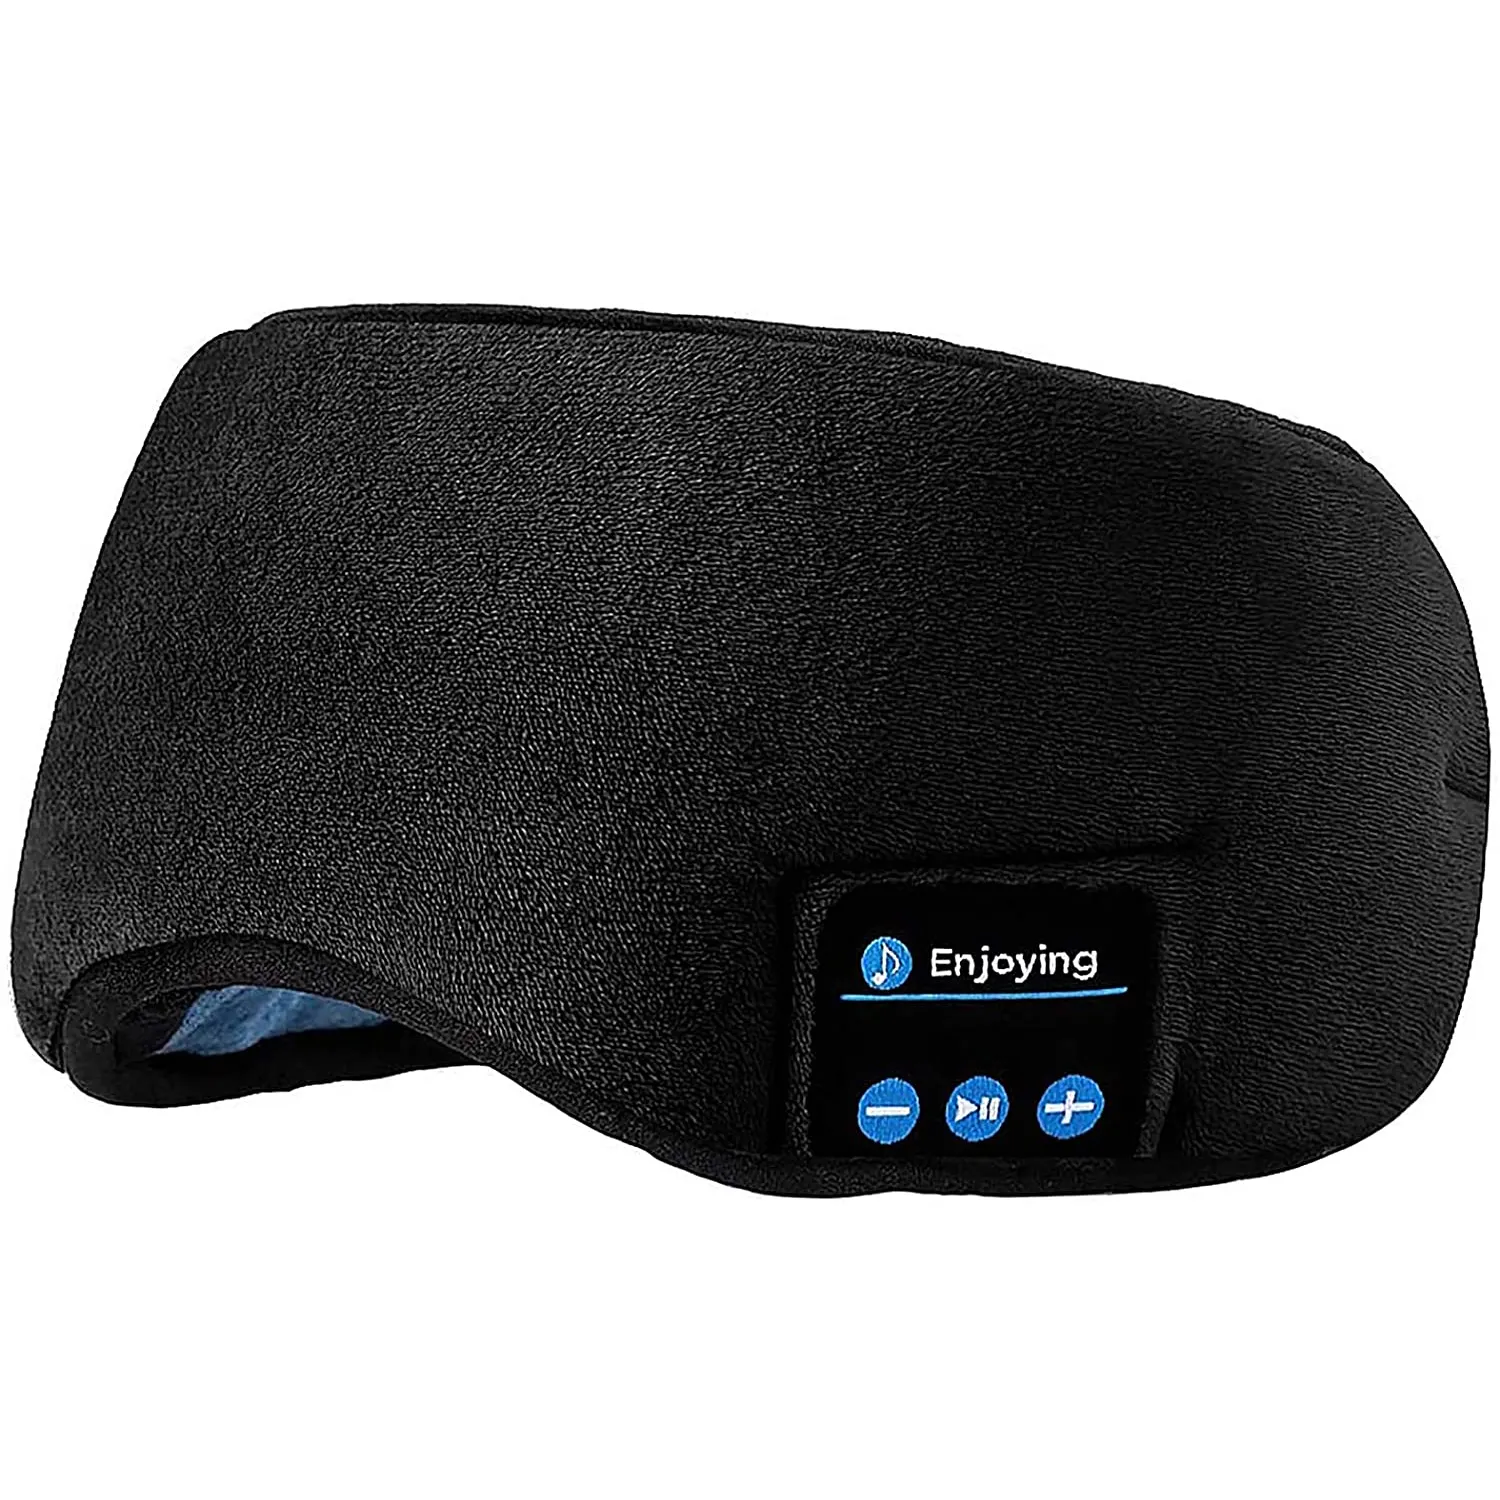 BT 5.0 Wireless Music Headset 3D Sleeping Eye Mask for Side Sleepers Washable Travel Music Sleep Headphones